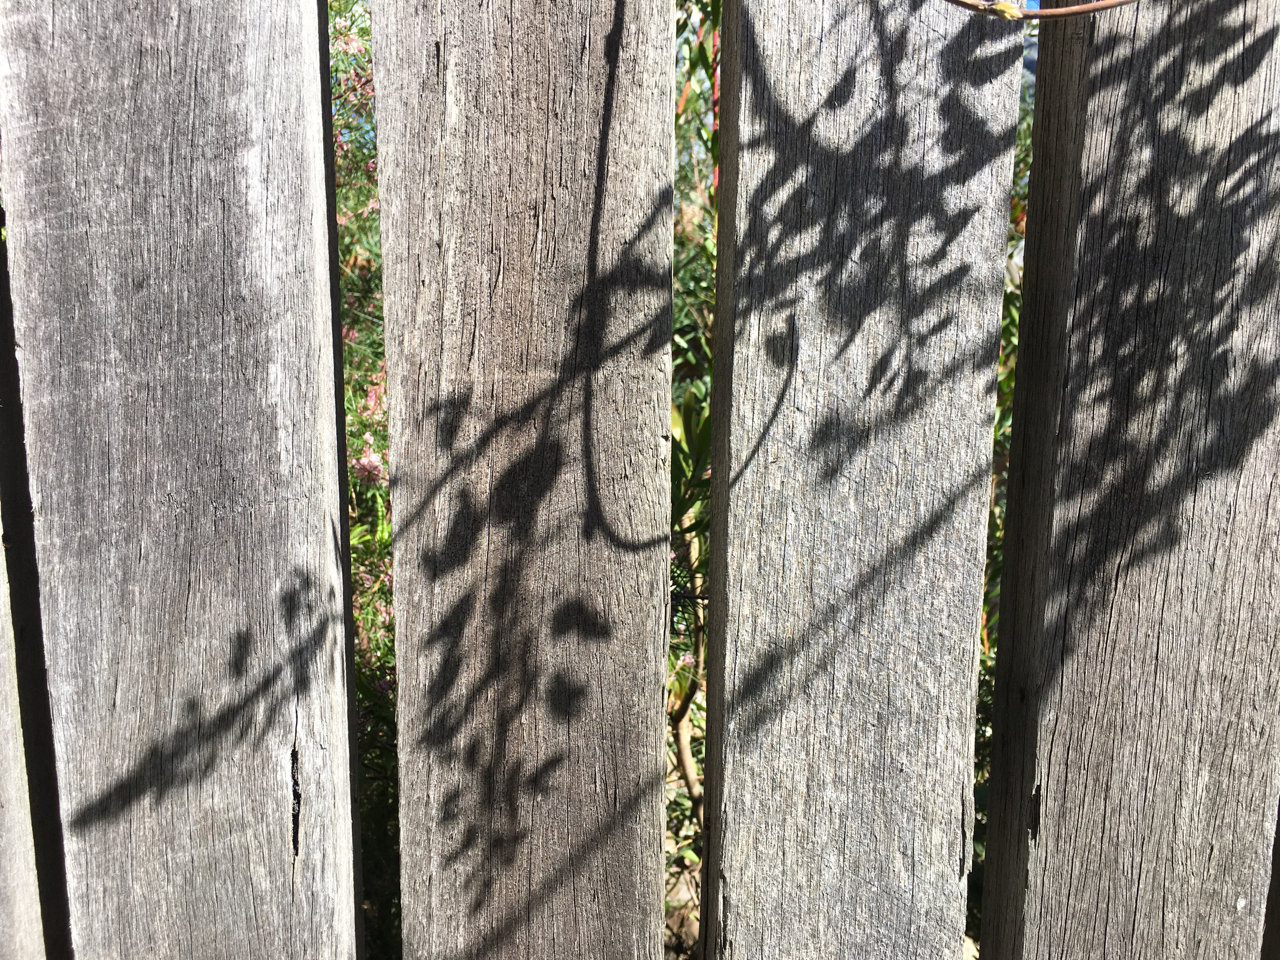 shadows on the fence